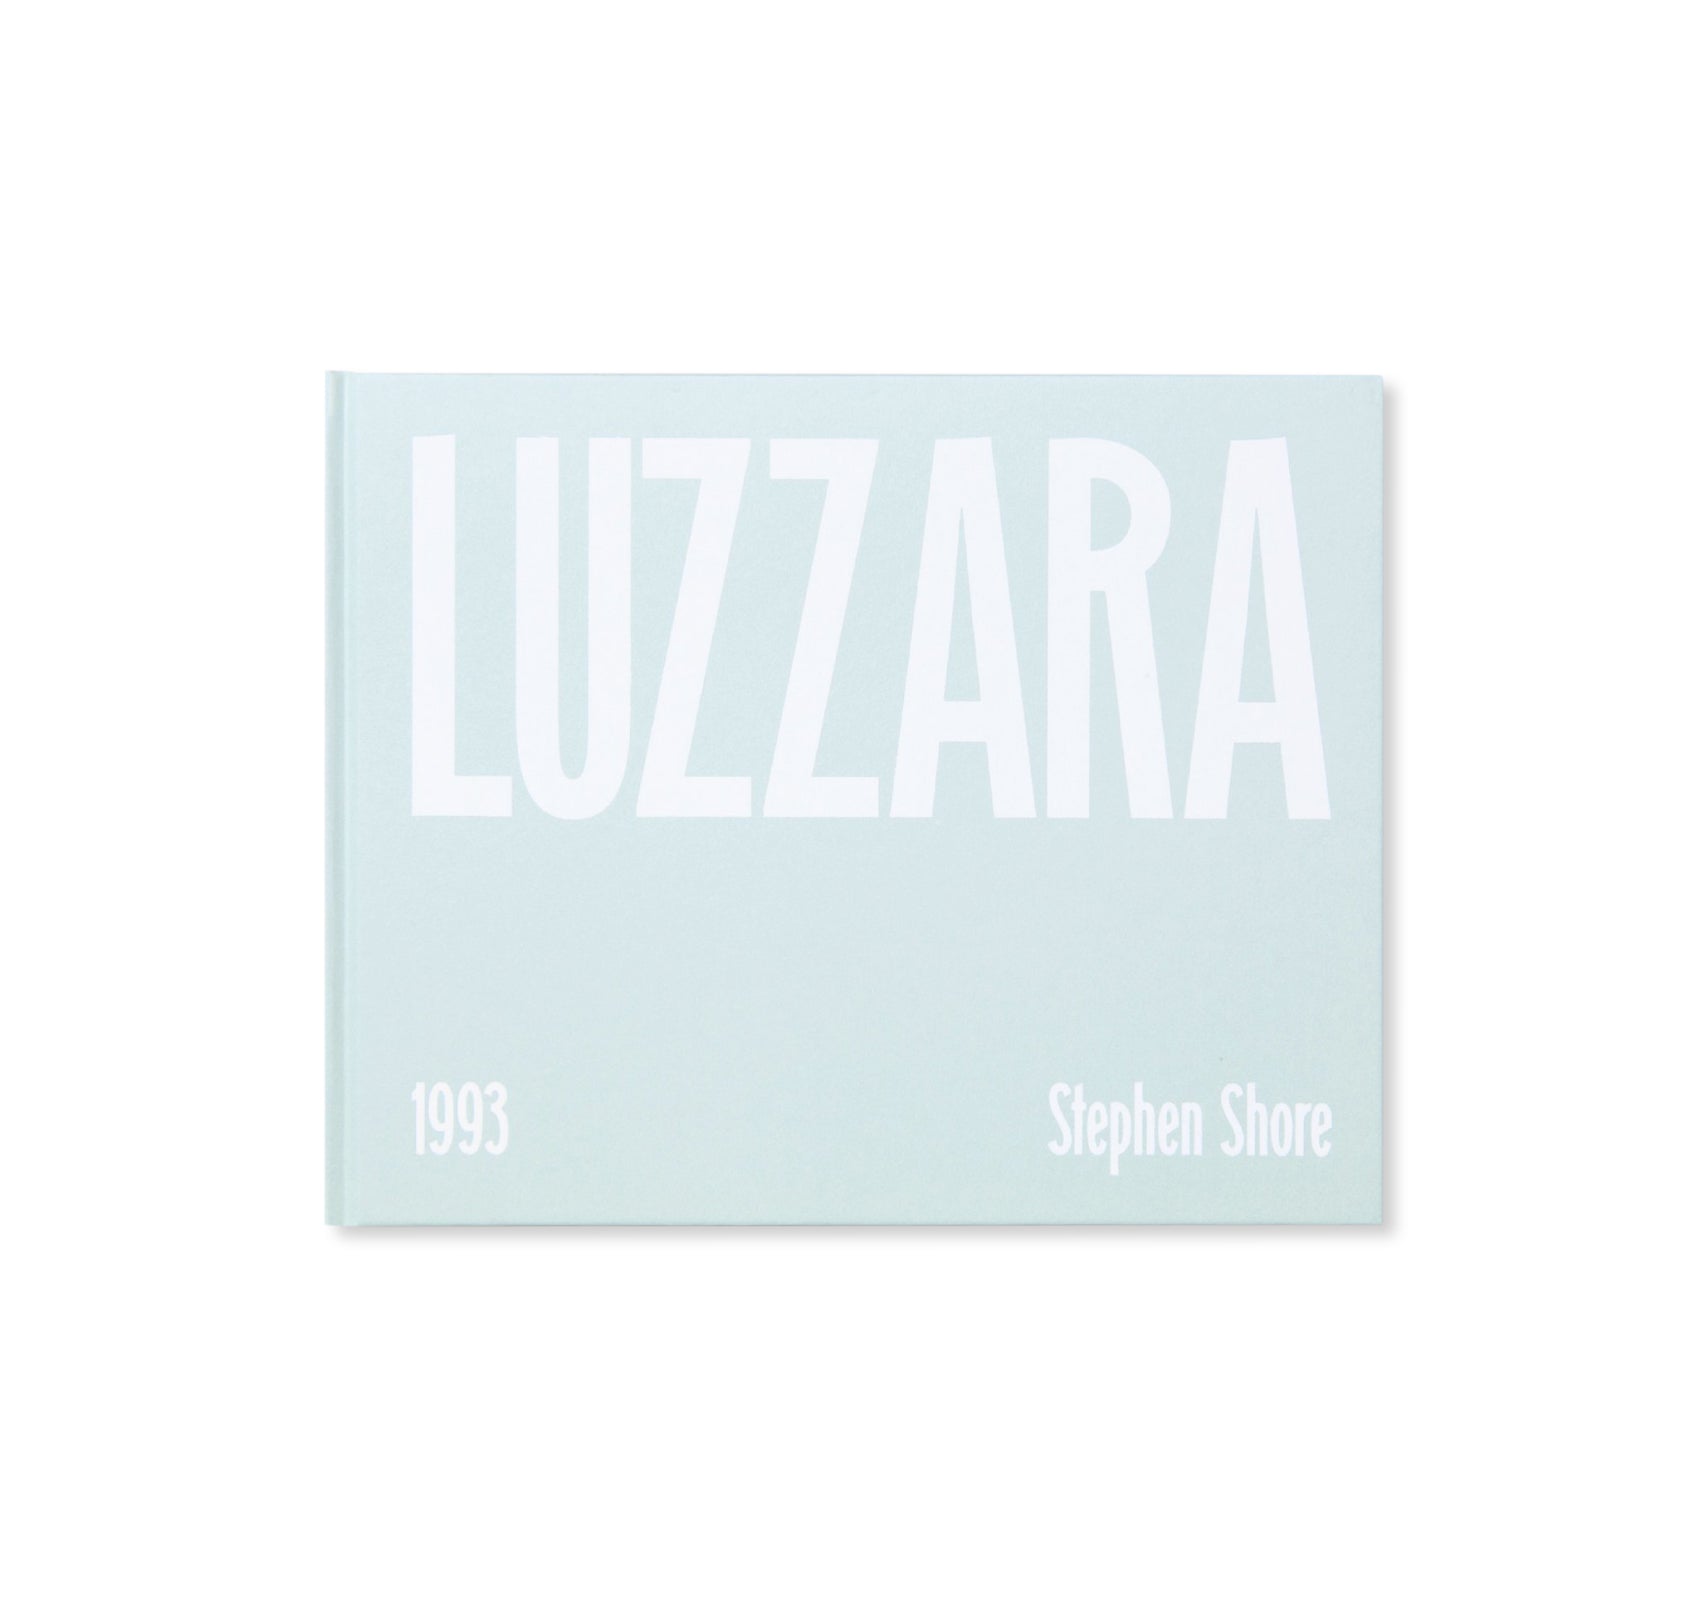 LUZZARA by Stephen Shore